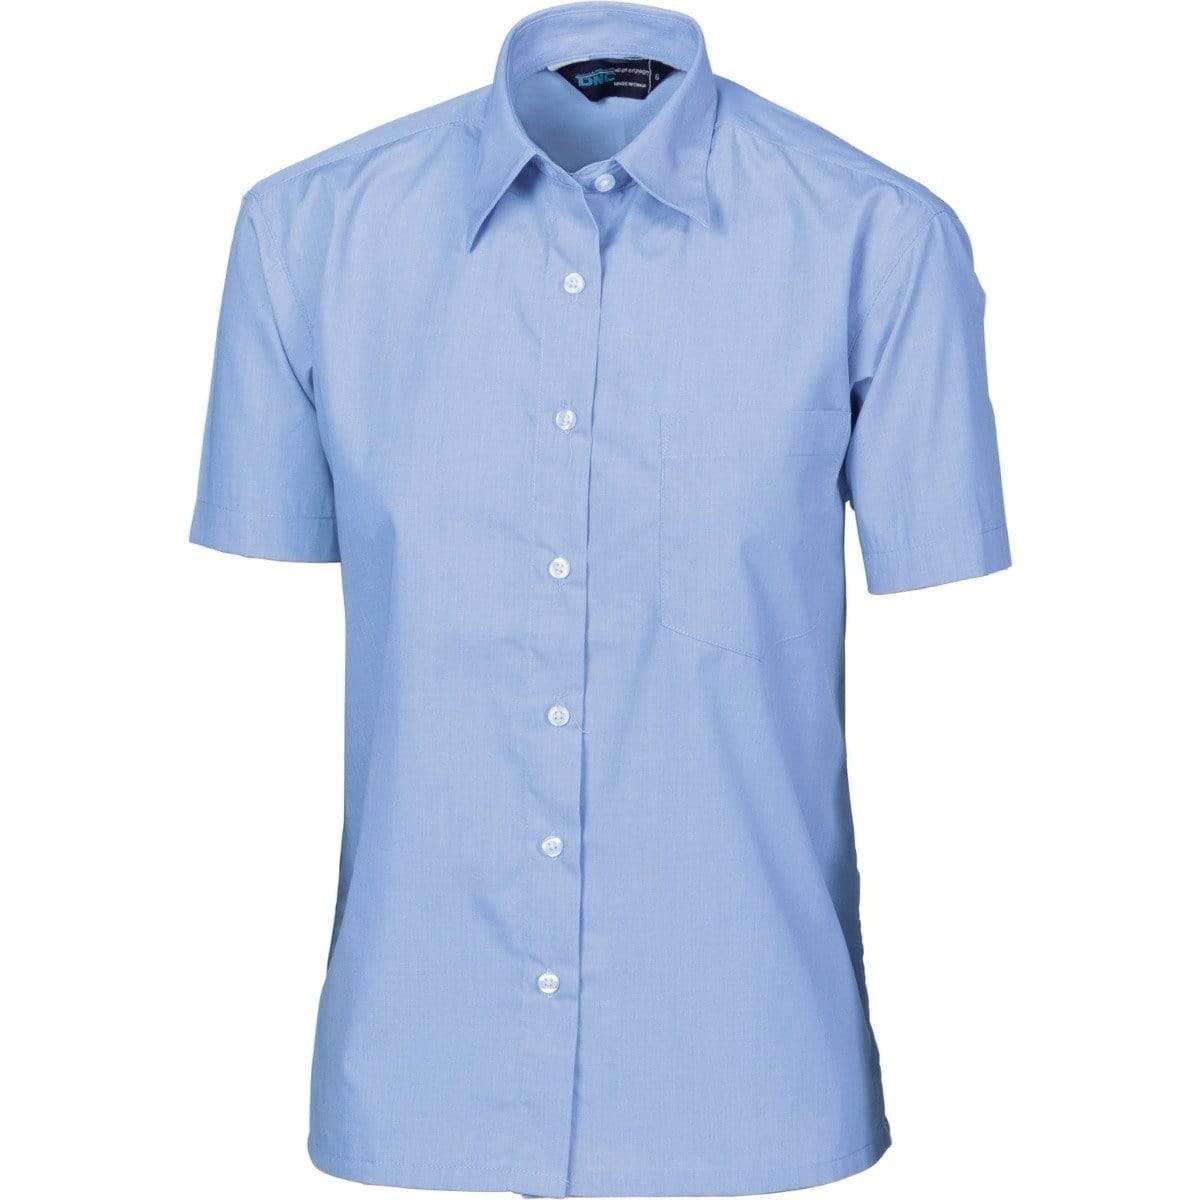 DNC WORKWEAR Polyester Cotton Short Sleeve Business Shirt 4211 Corporate Wear DNC Workwear Blue Chambray 6 